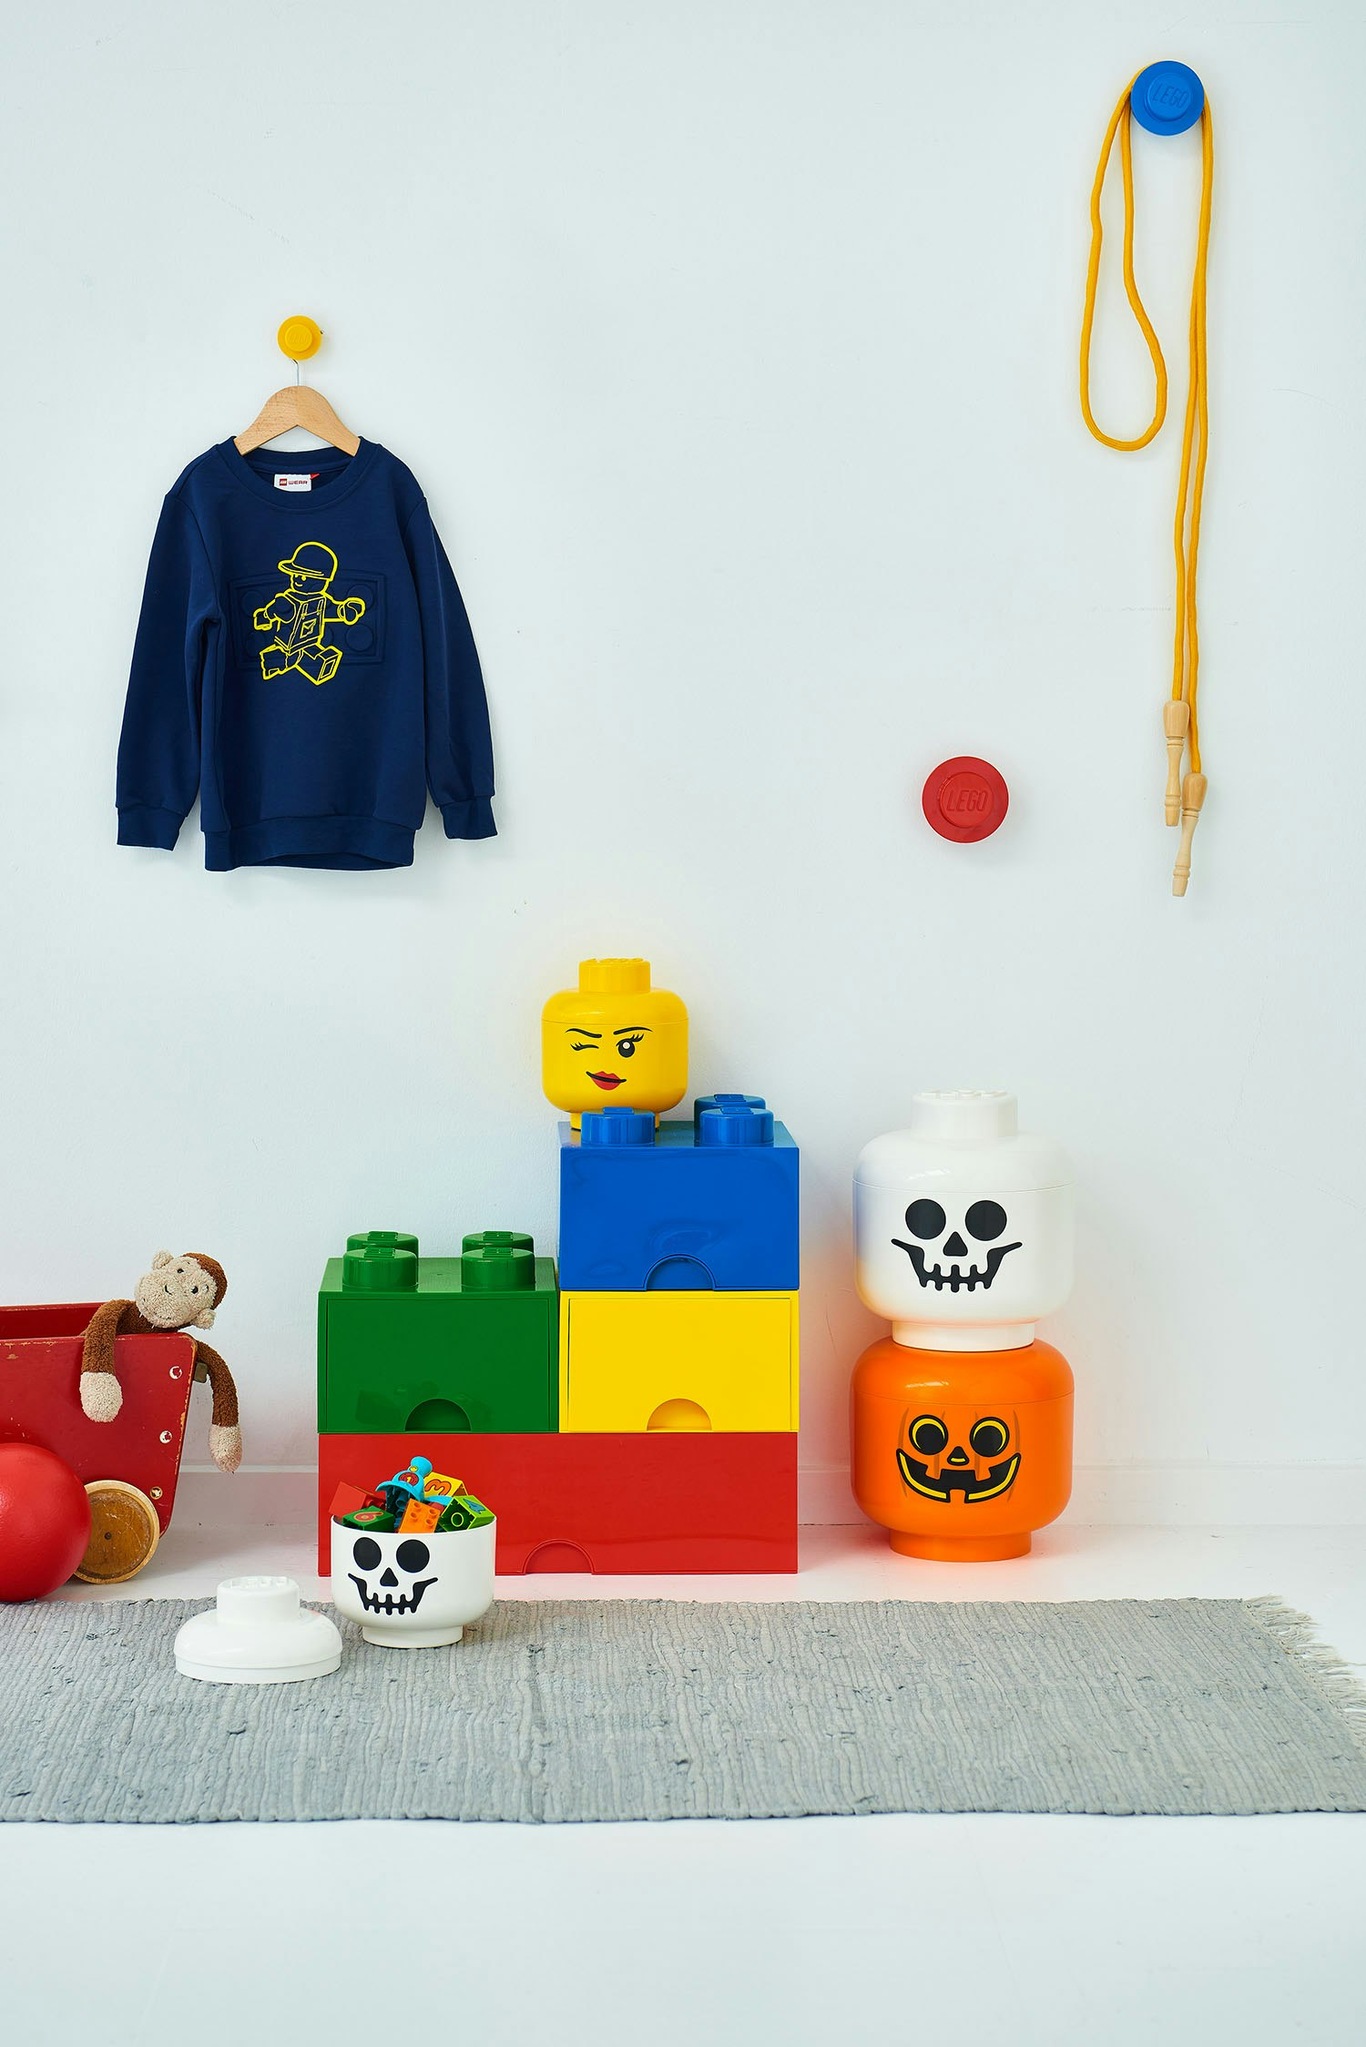 https://royaldesign.com/image/2/room-copenhagen-lego-storage-head-small-skeleton-2?w=800&quality=80